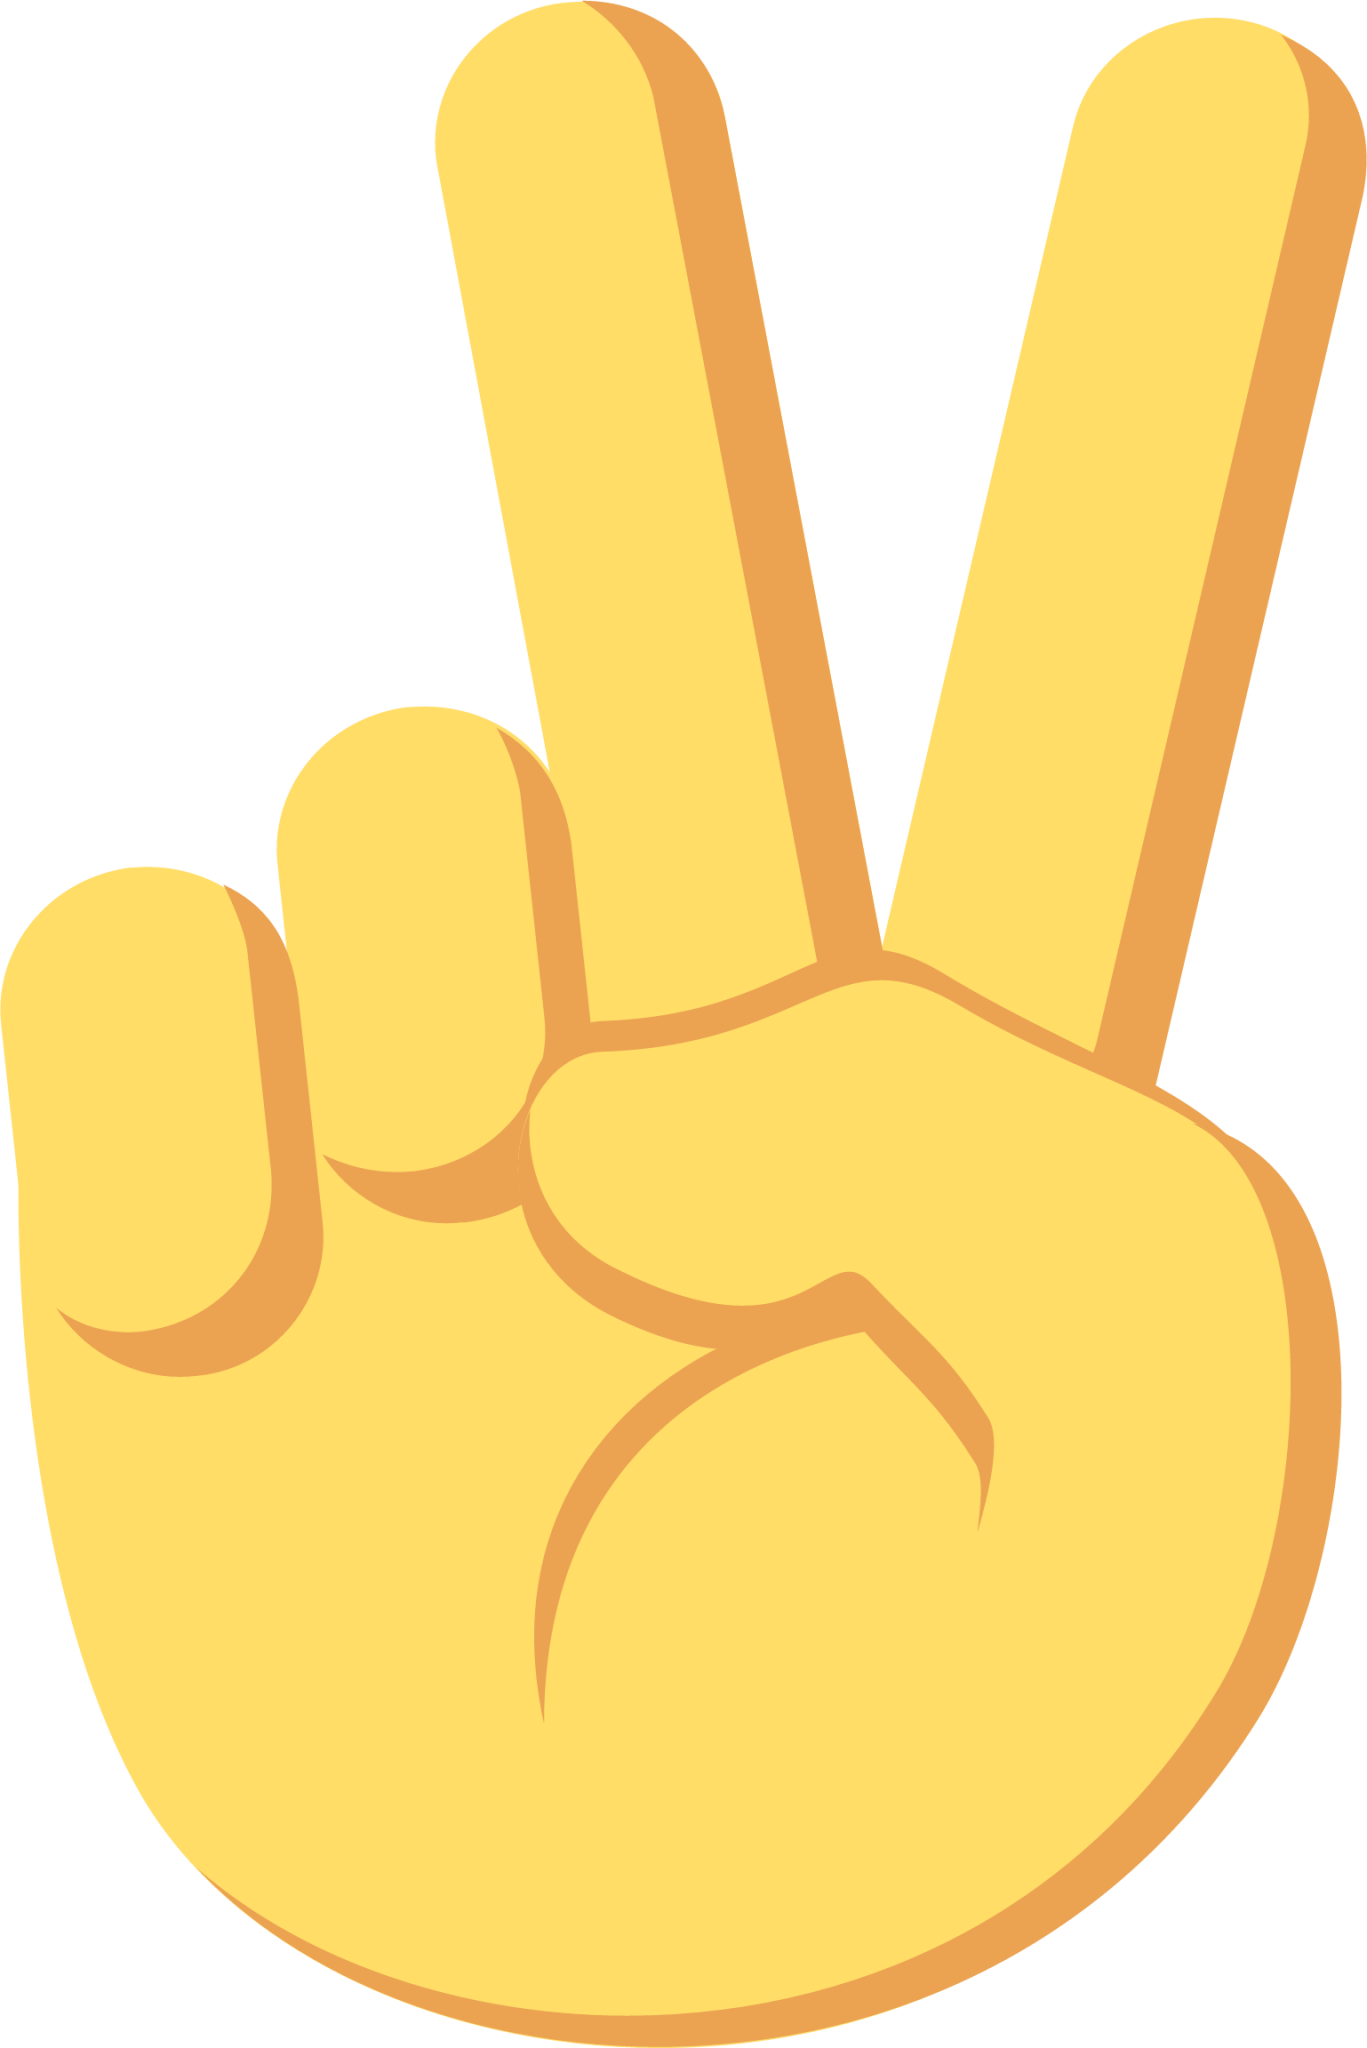 victory hand emoji